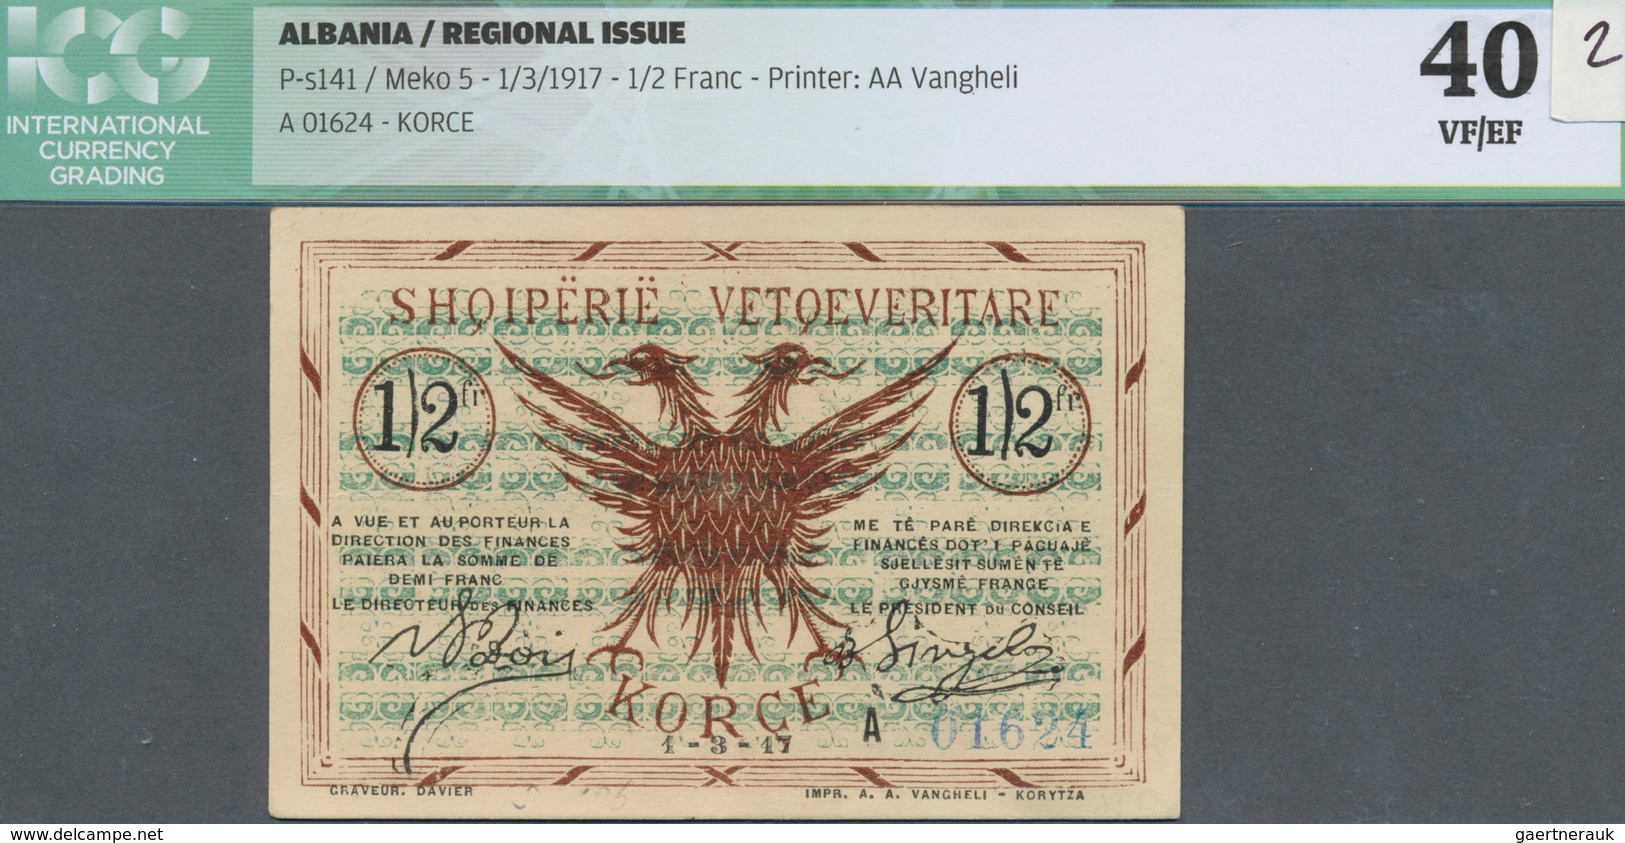 Albania / Albanien: 1/2 Franc 01.03.1917 P. S141, Printer AA Vangheli, S/N #A01624 With Center Fold, - Albania